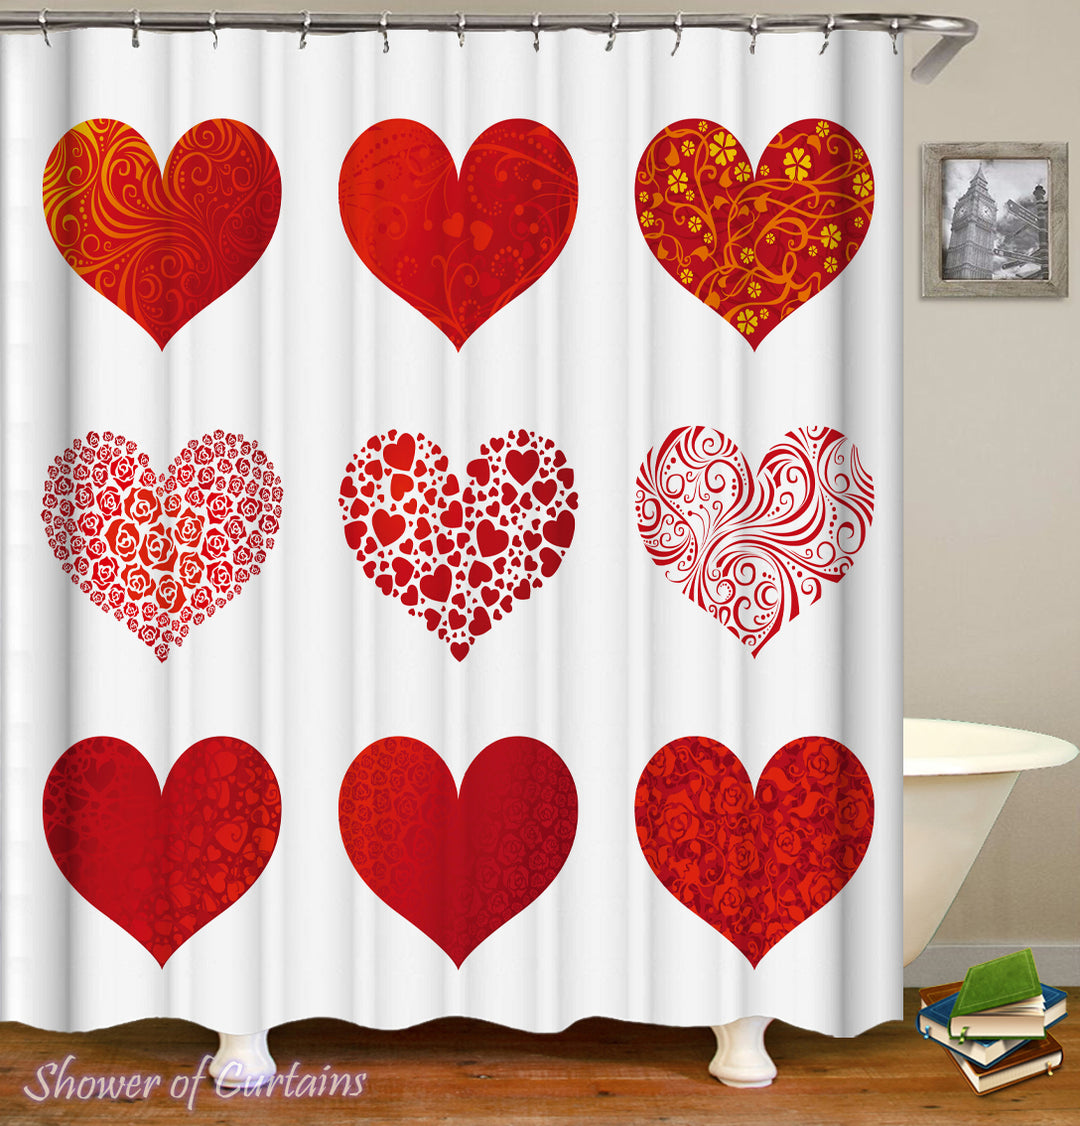 The Nine Hearts shower curtain